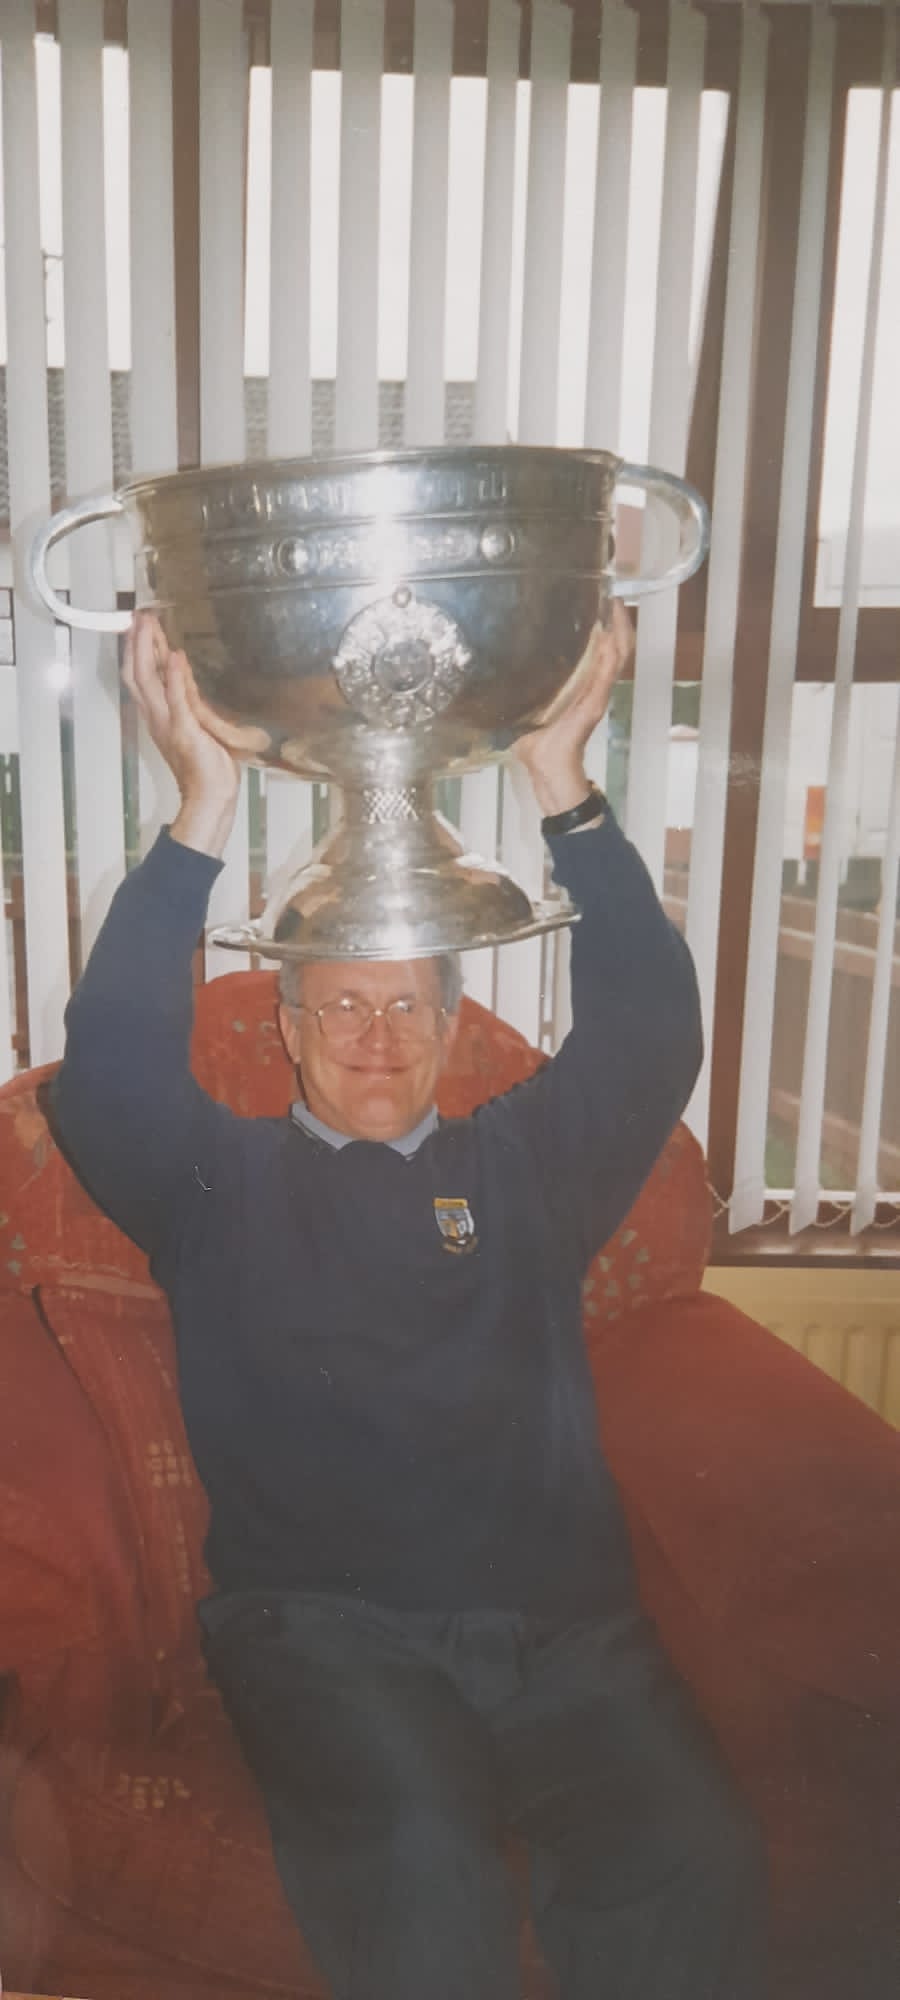 Sad passing of Coalisland GAA fanatic Tommy